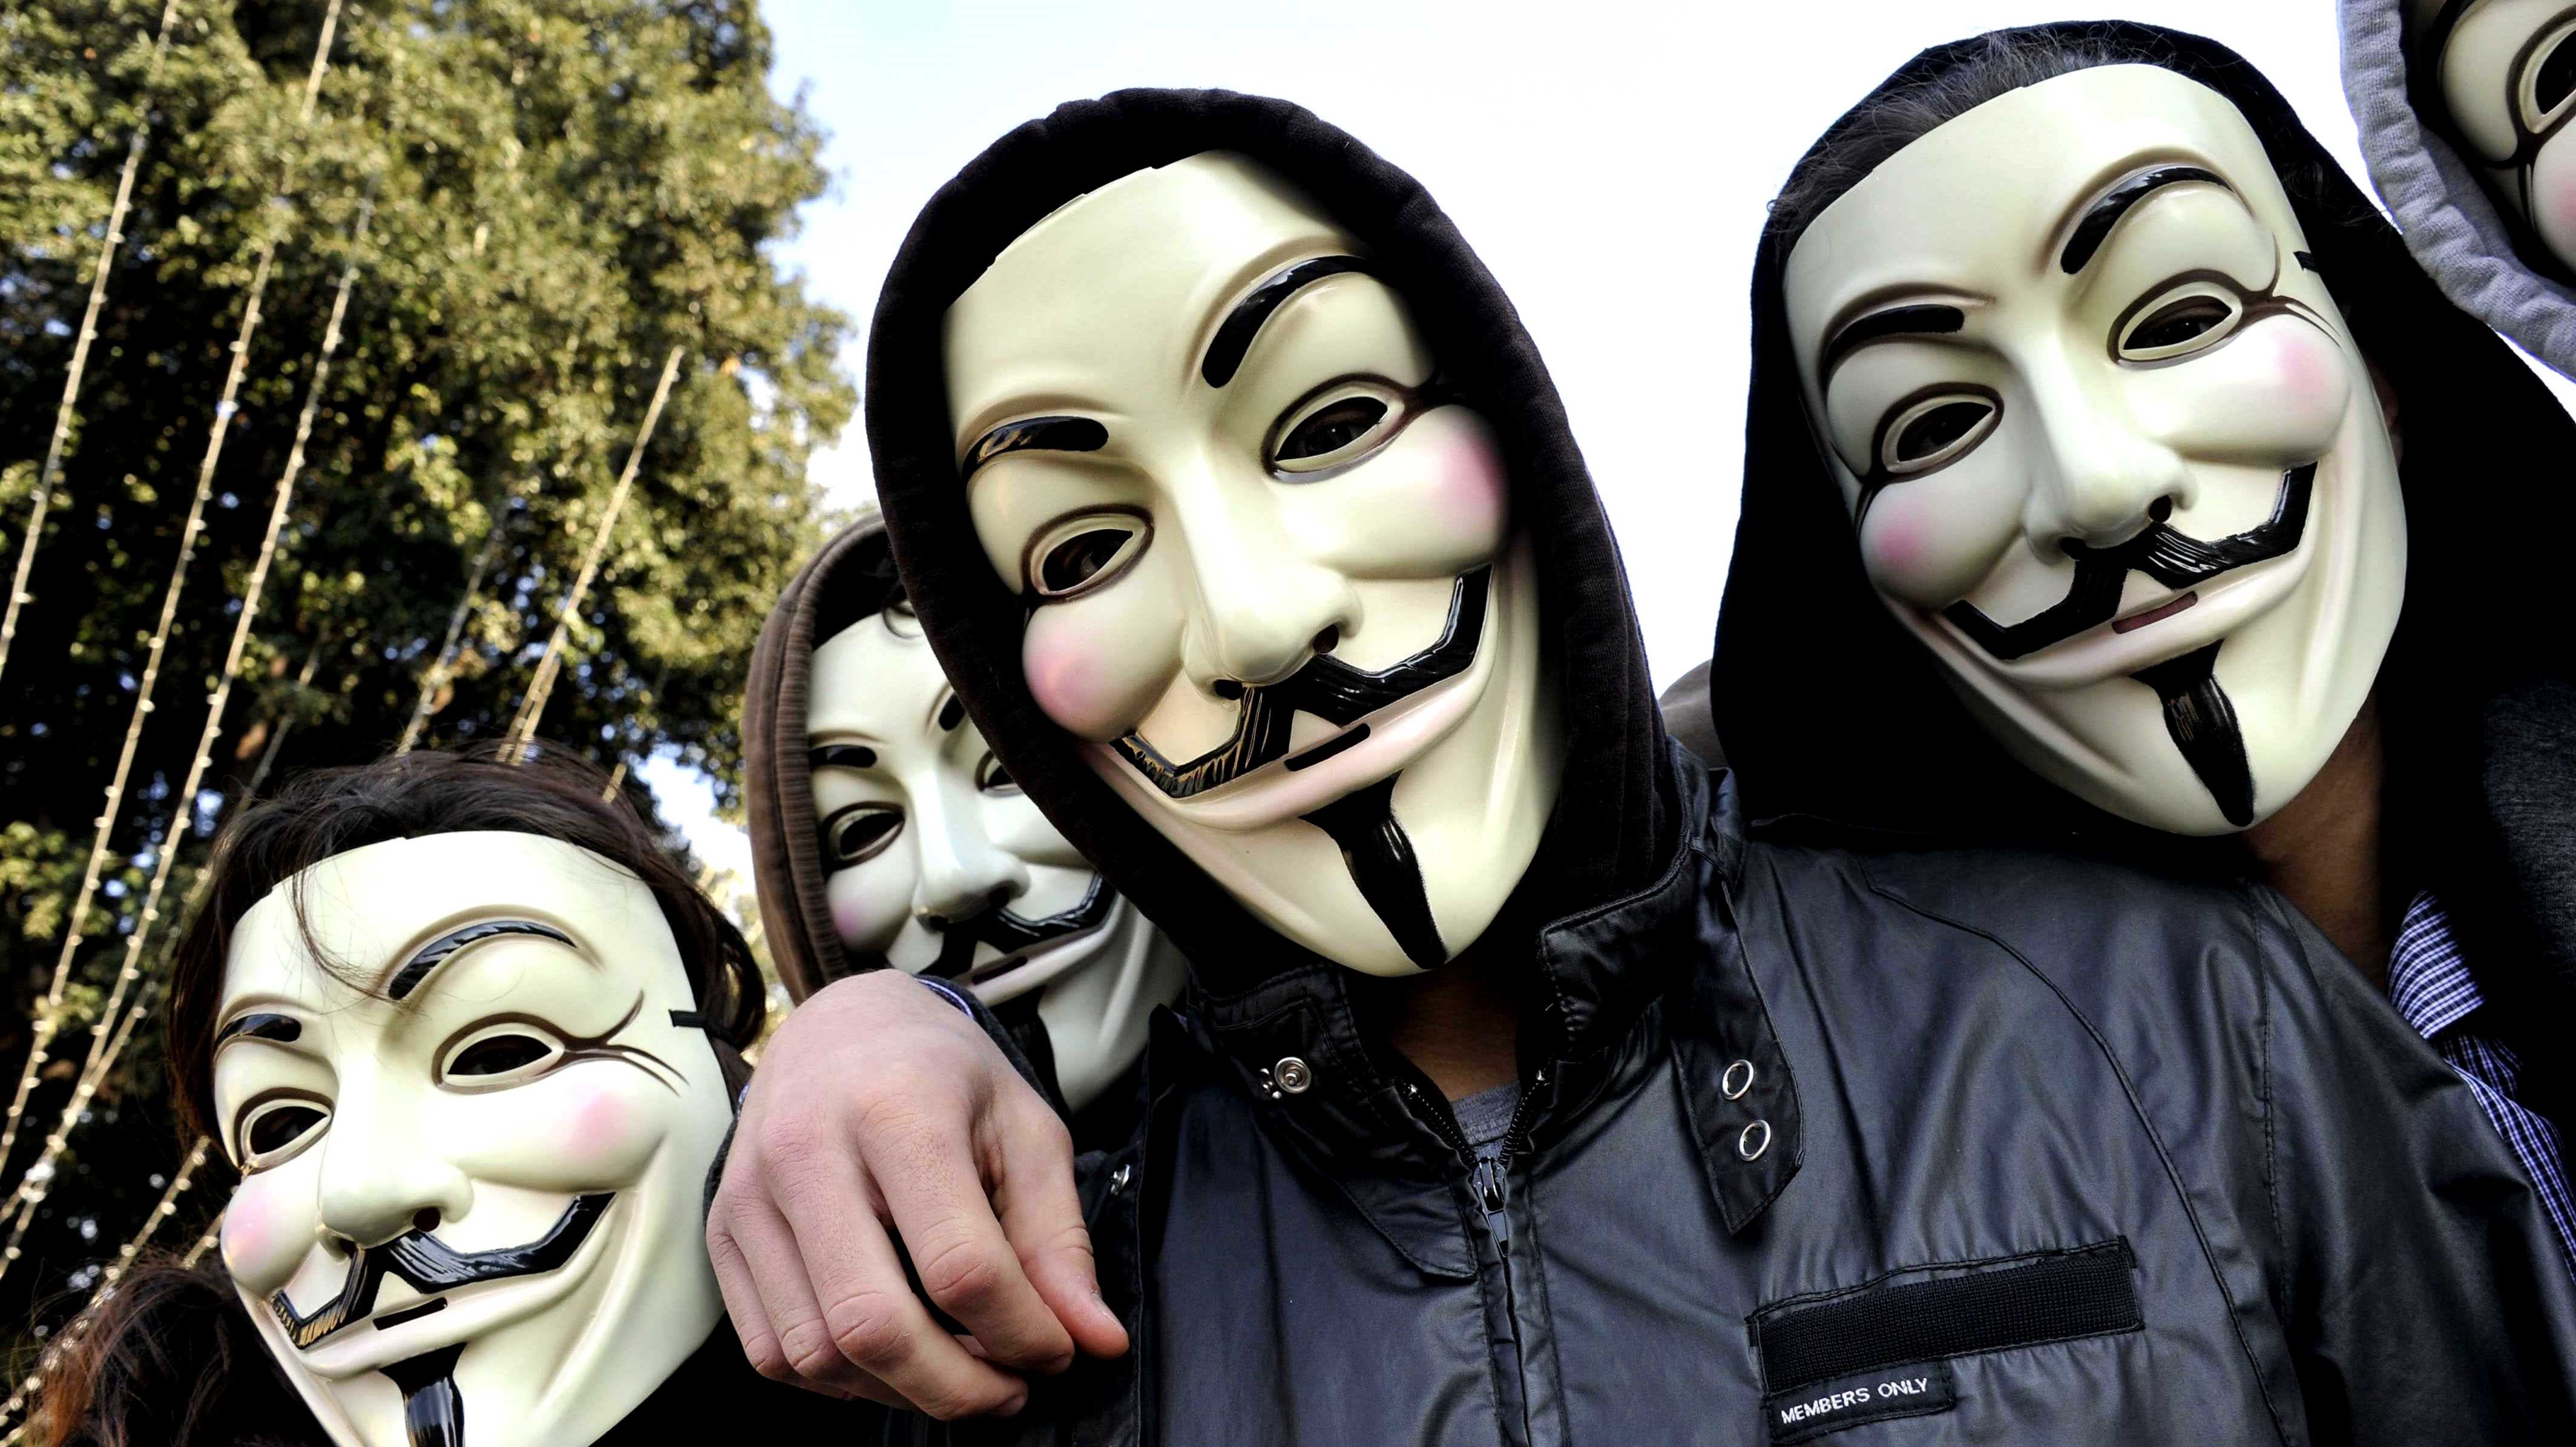 Anonymus_skupina_protest_hackeri_útok_ACTA